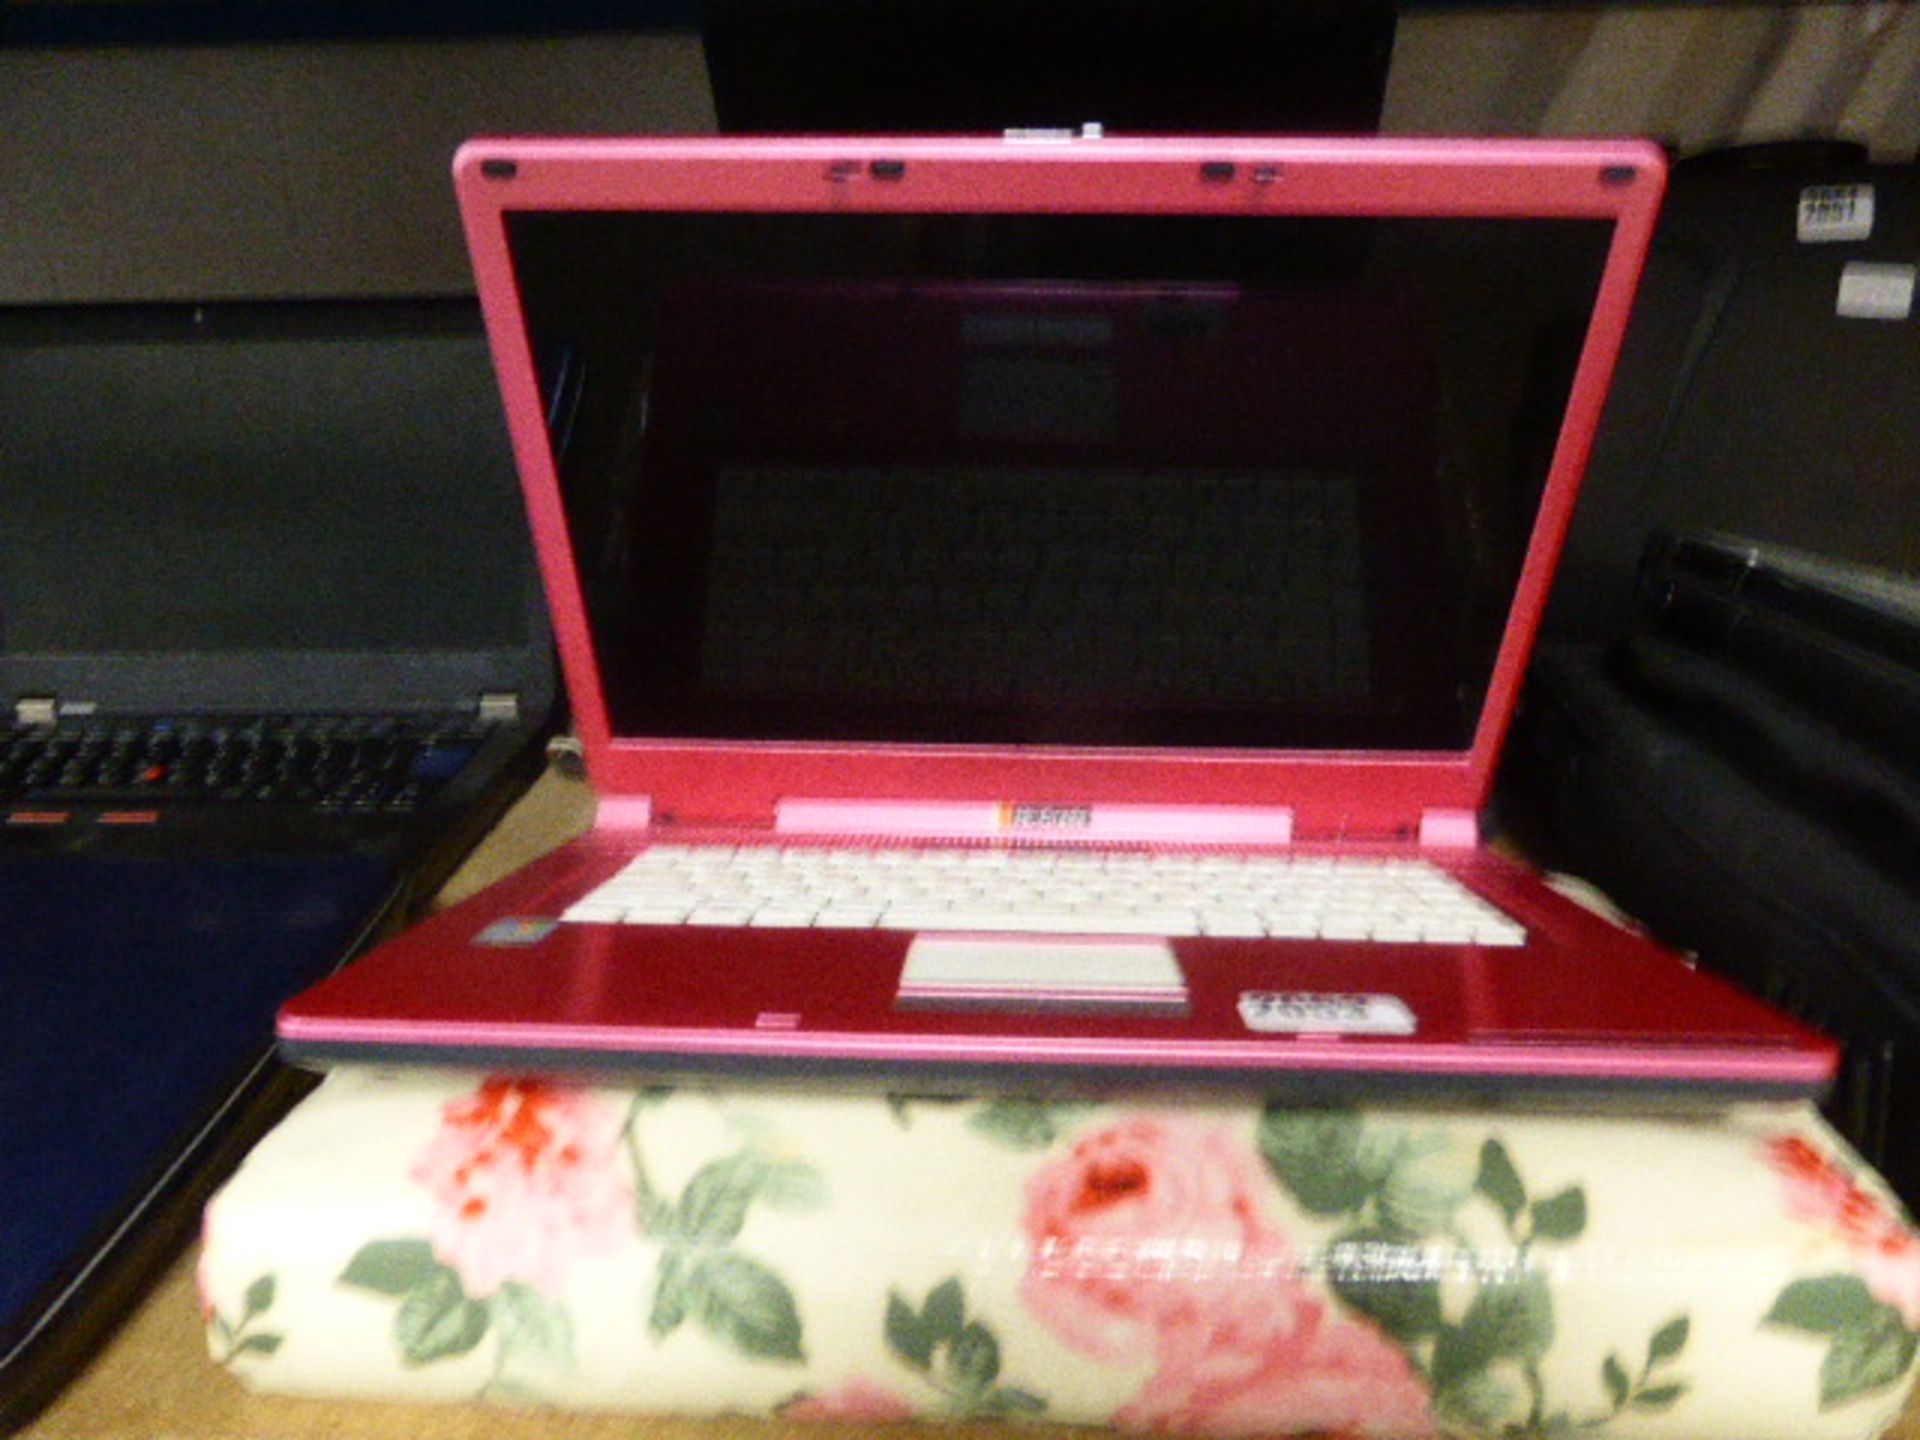 Floral laptop carry bag with High Grade laptop in pink, Windows Vista